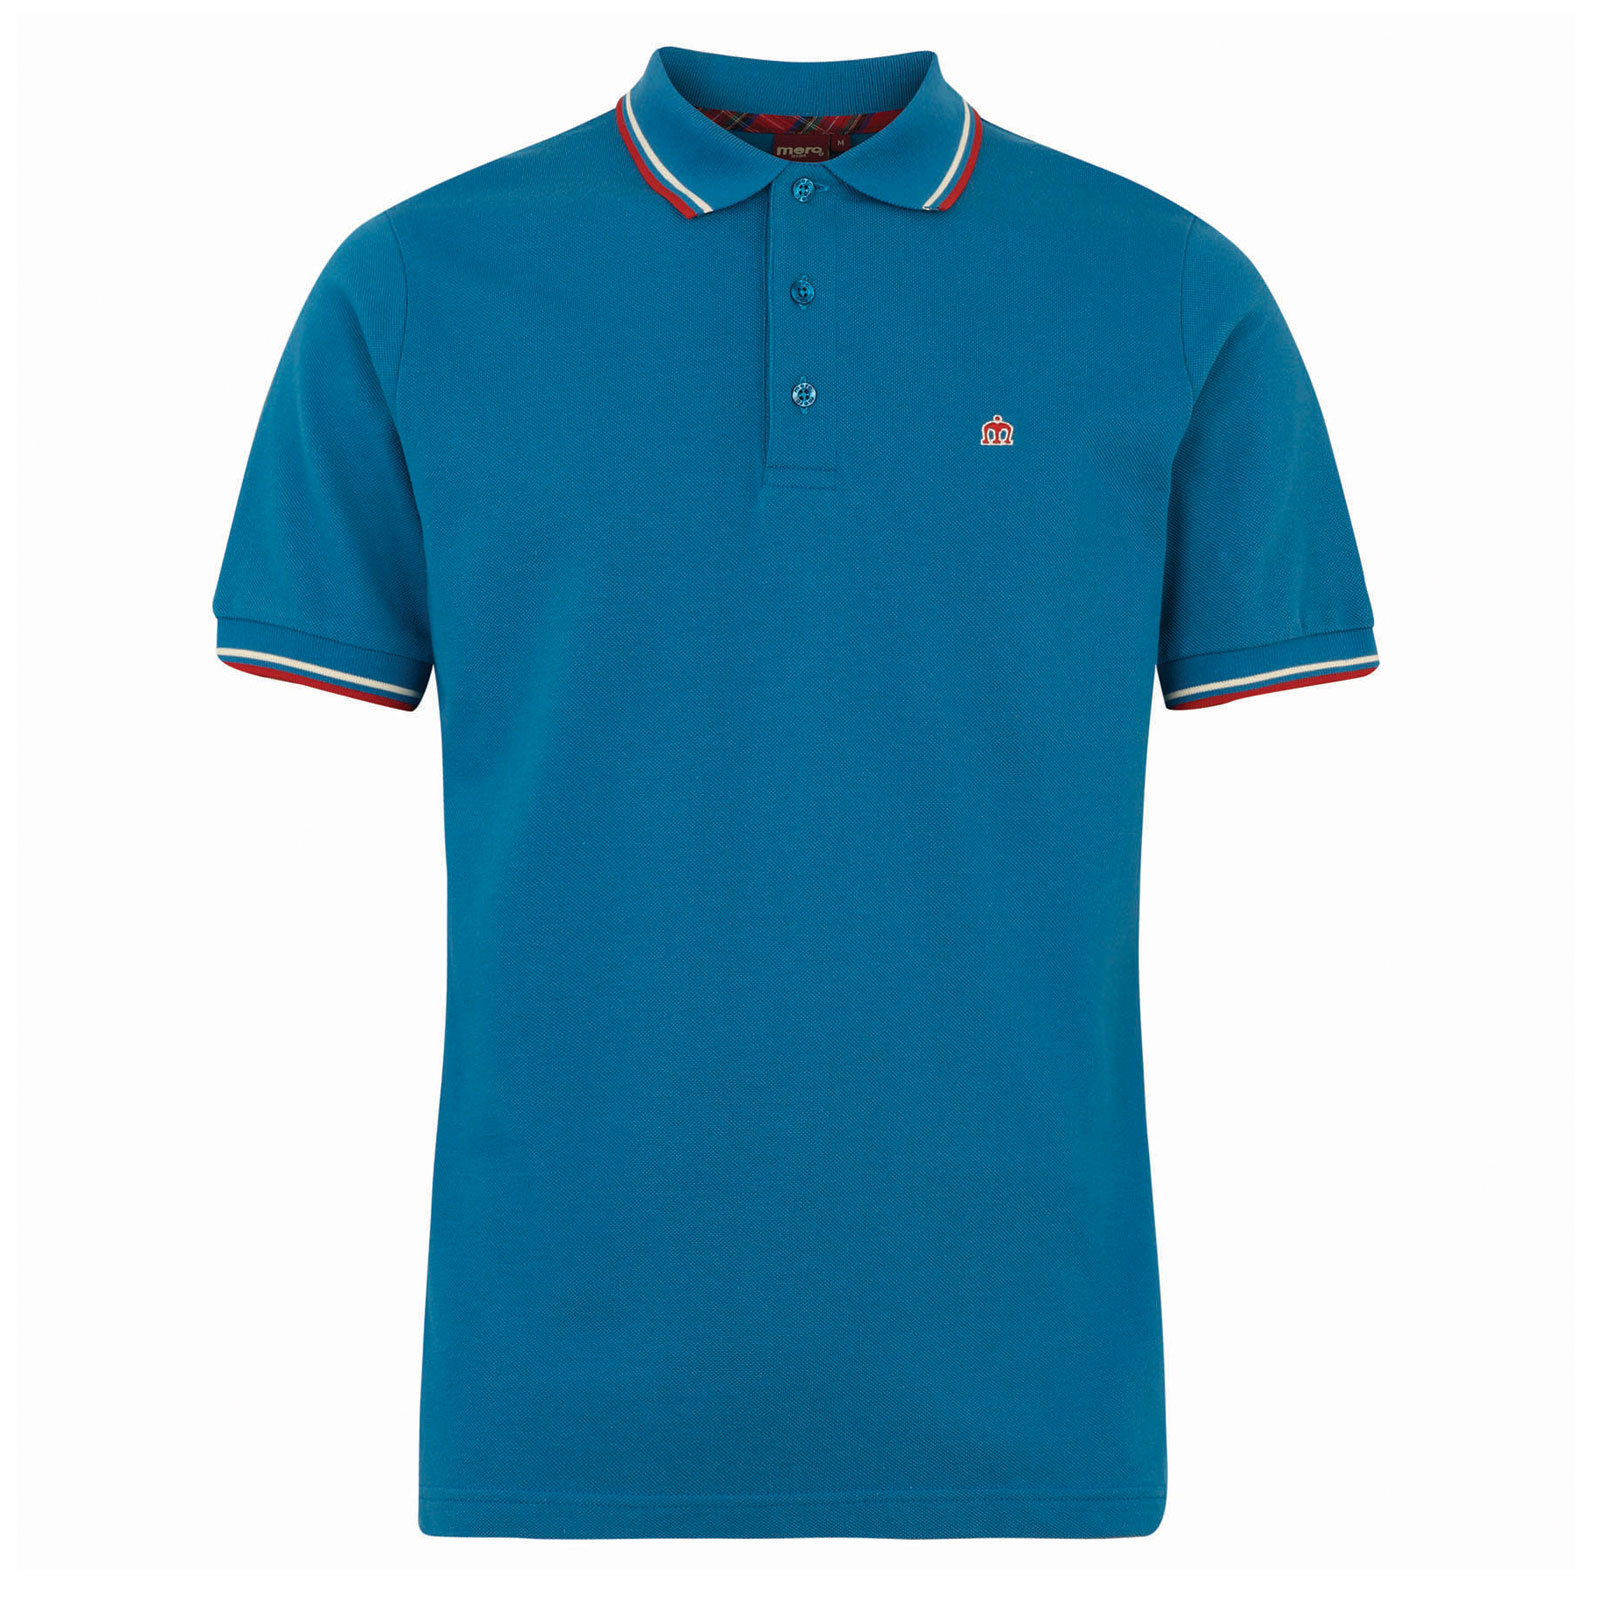 Card Polo Shirt   Buy Polo Shirts Including Men S Polo Shirts At Merc